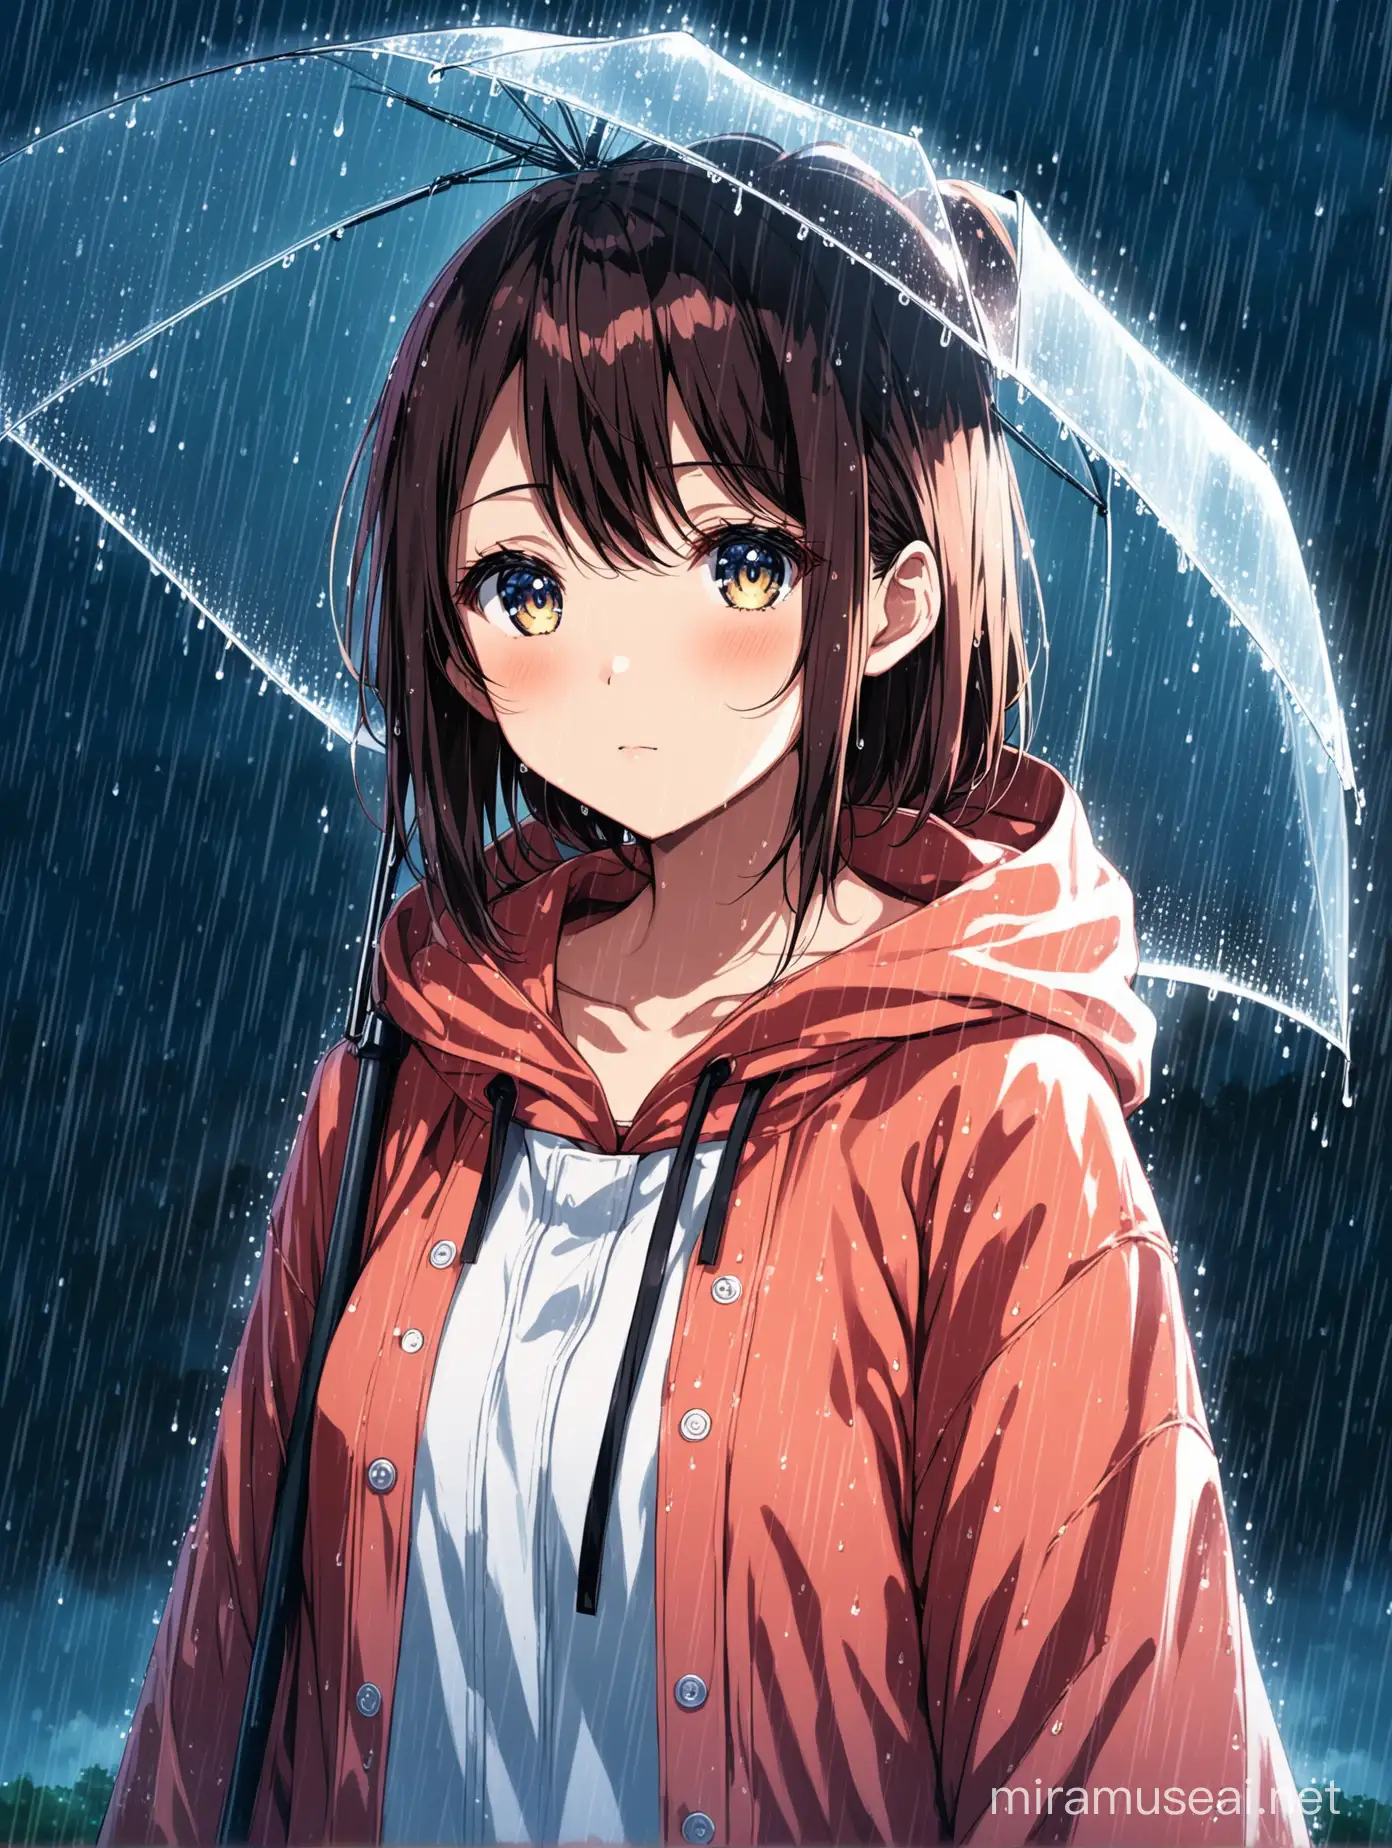 Anime Girl Walking in the Rainy Cityscape